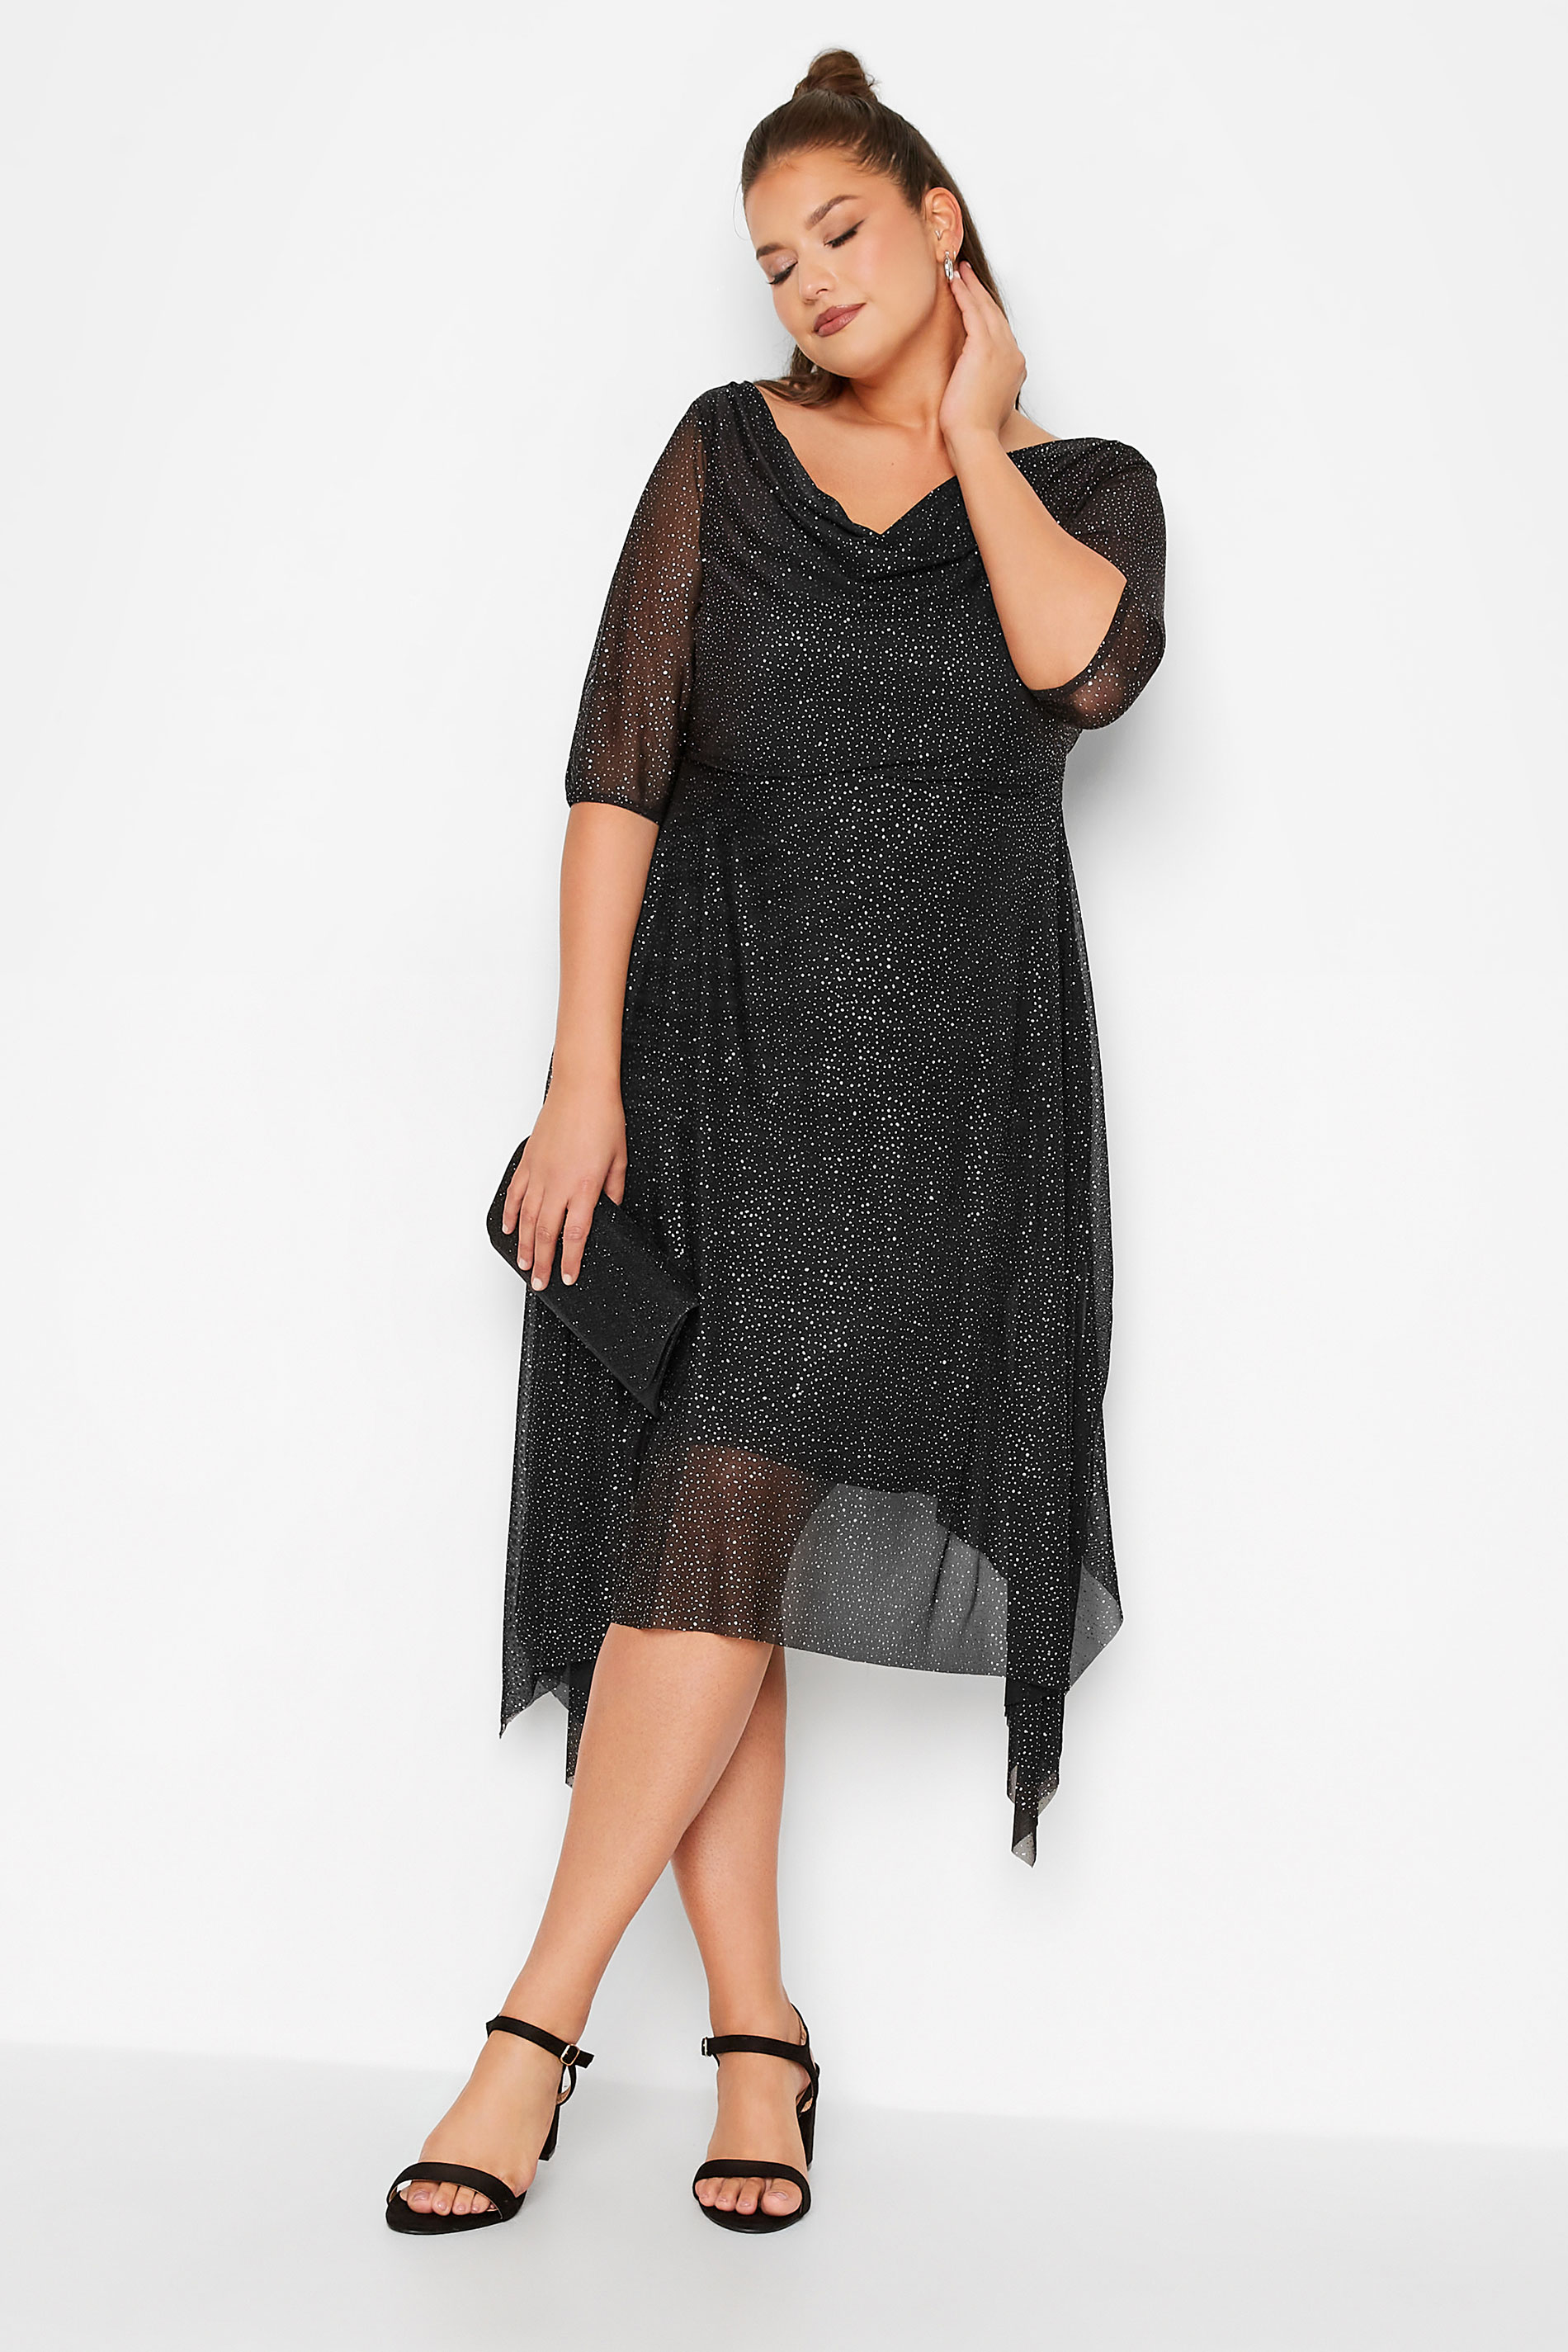 YOURS LONDON Plus-Size Curve Black Glitter Cowl Neck Midi Dress | Yours Clothing 2